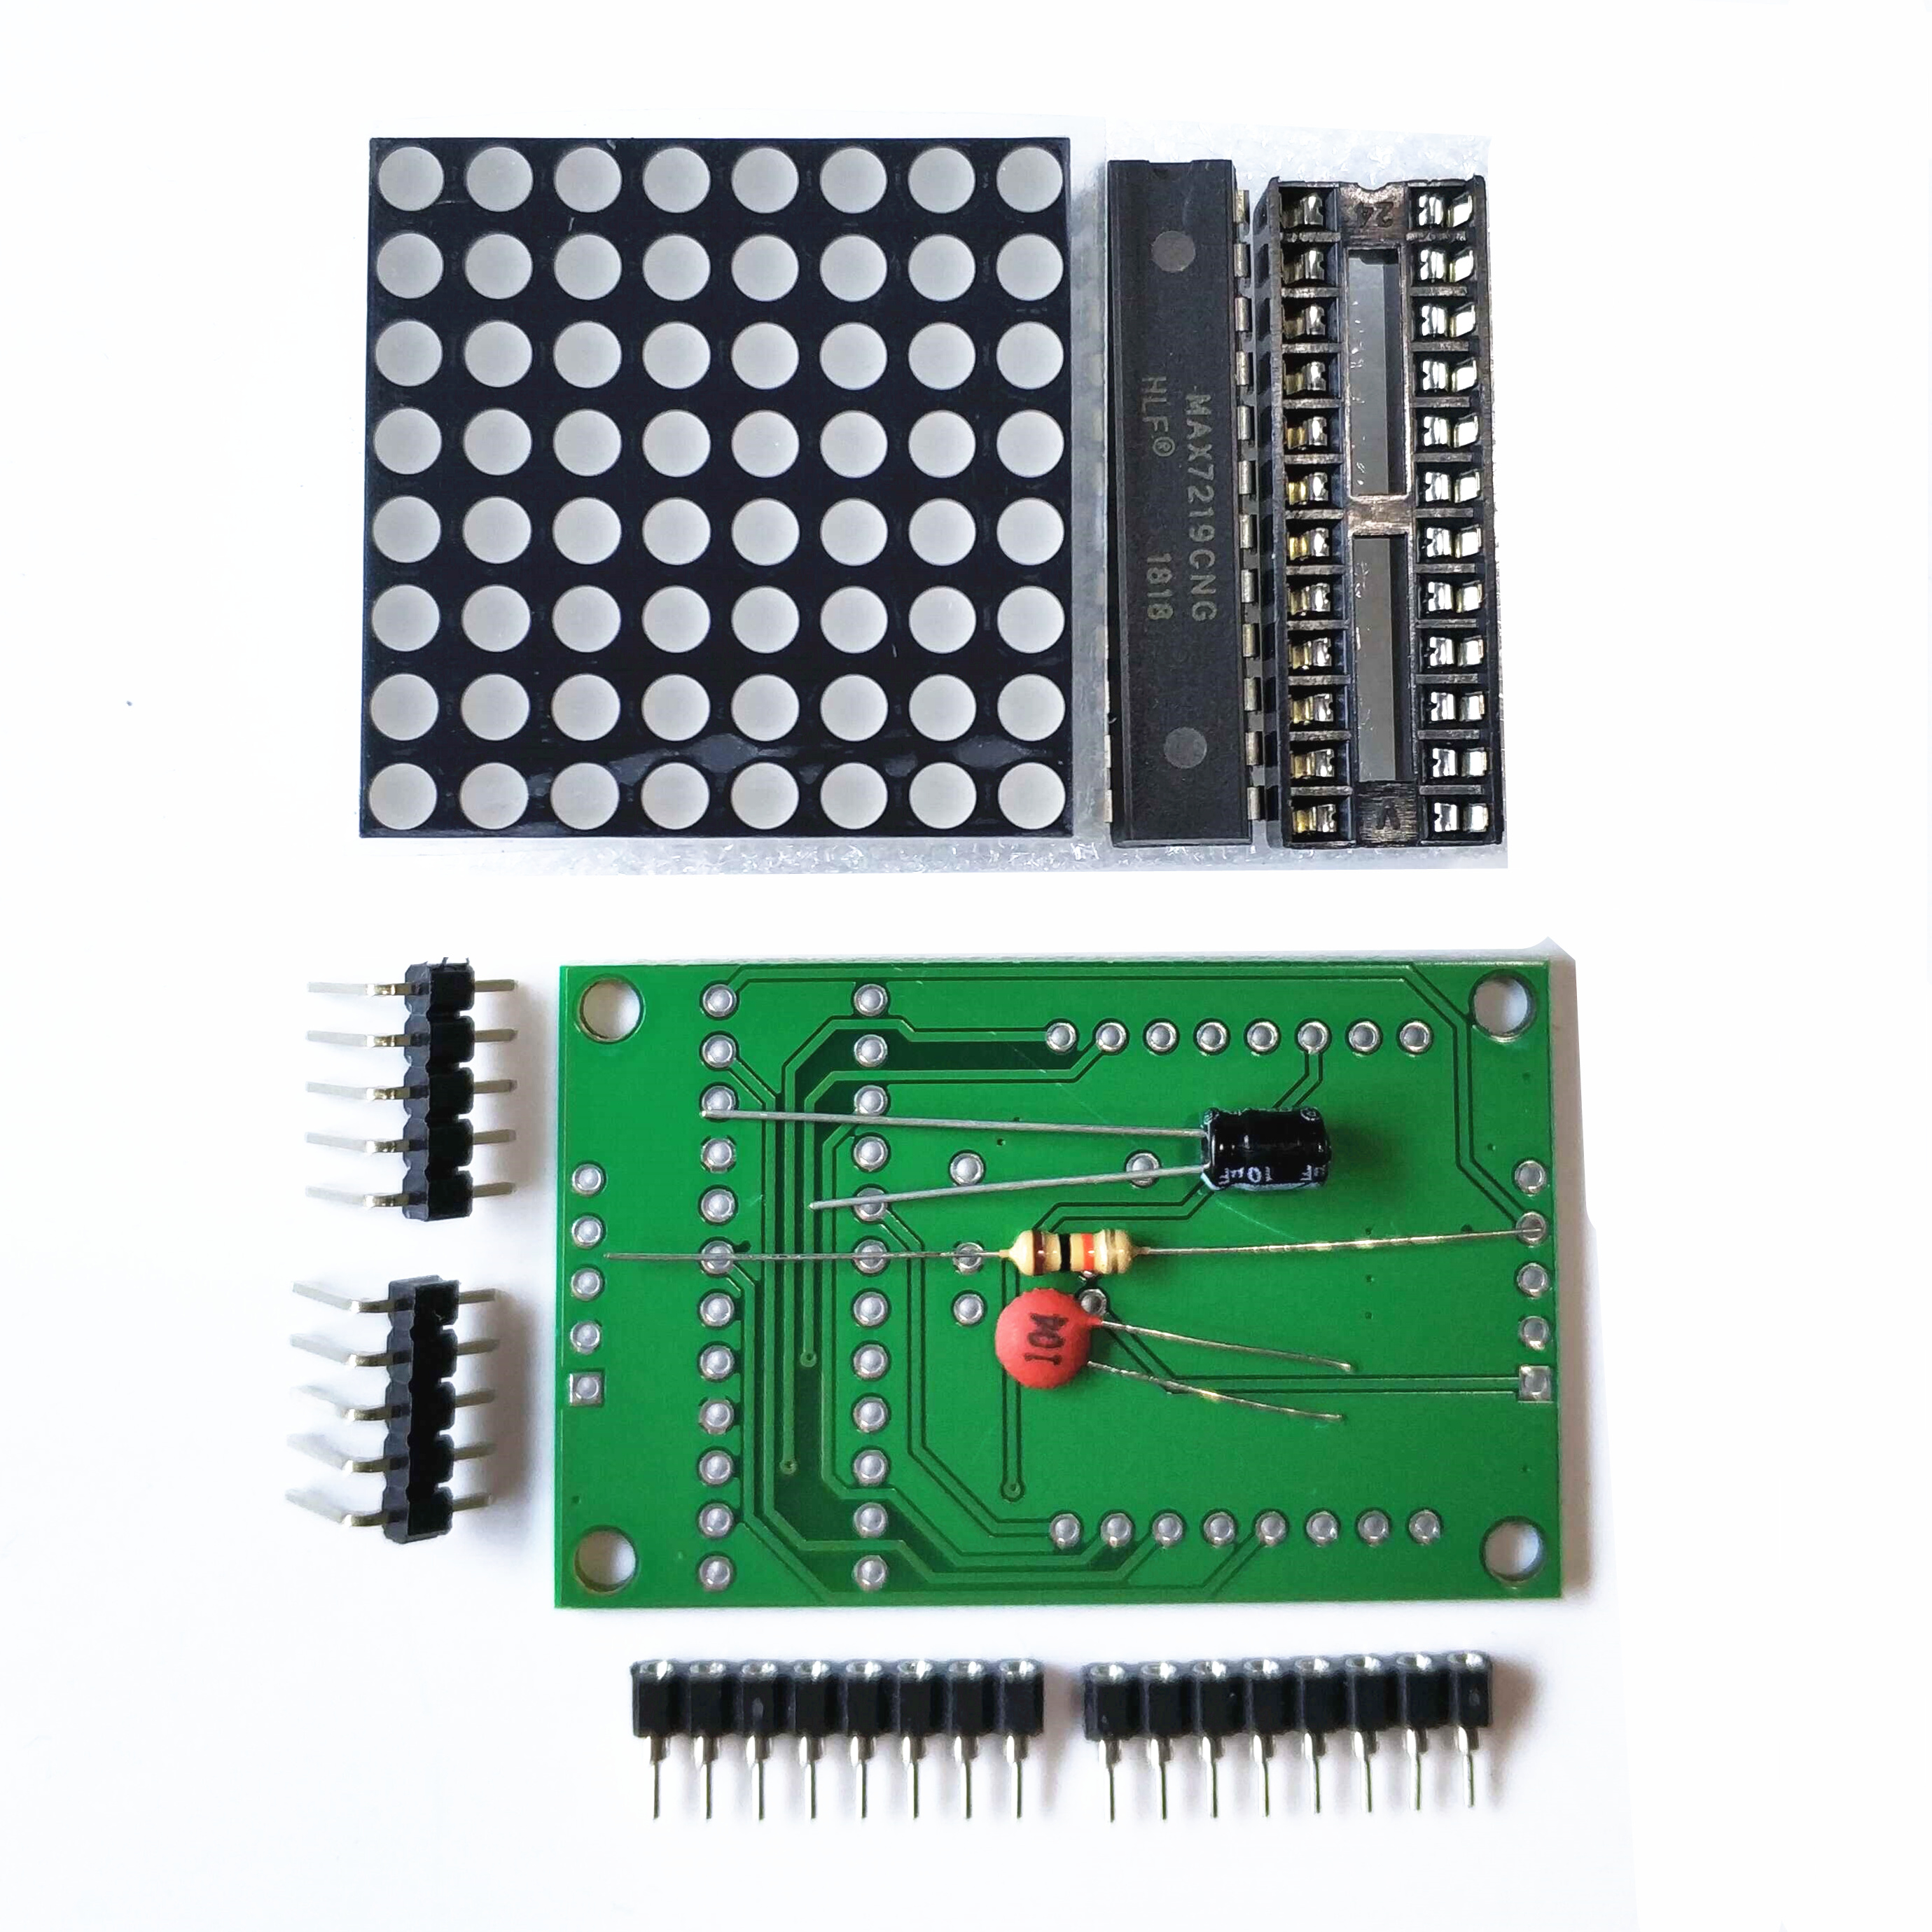 MAX7219 dot matrix display module SCM control module DIY kit can be spliced plug-in parts